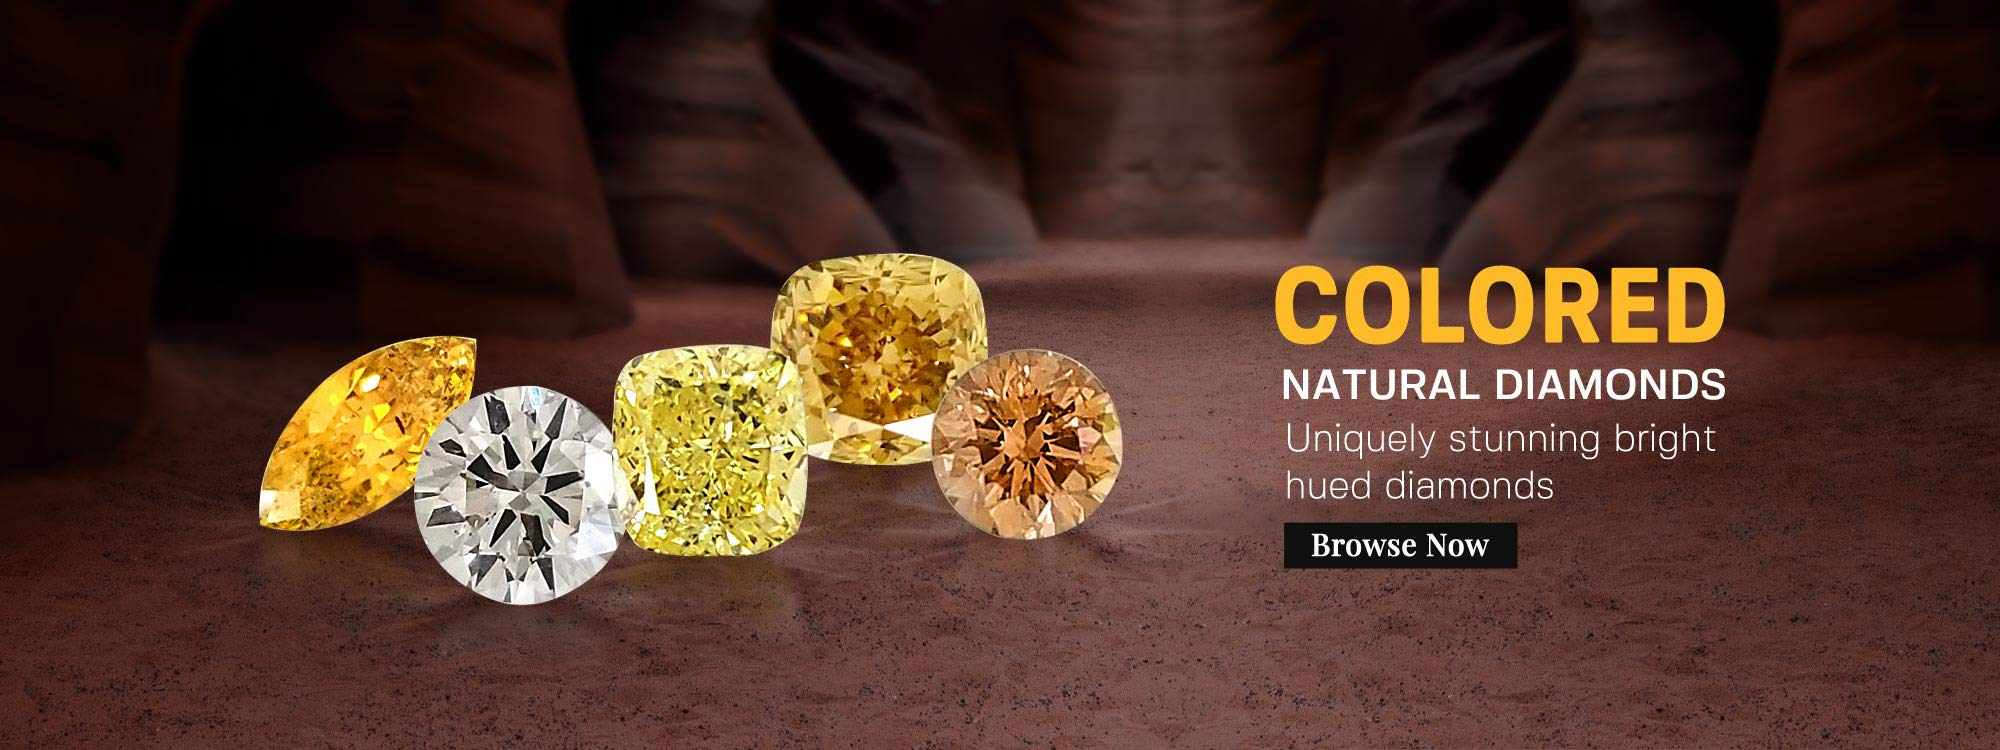 colored natural diamonds at gemco international inc.